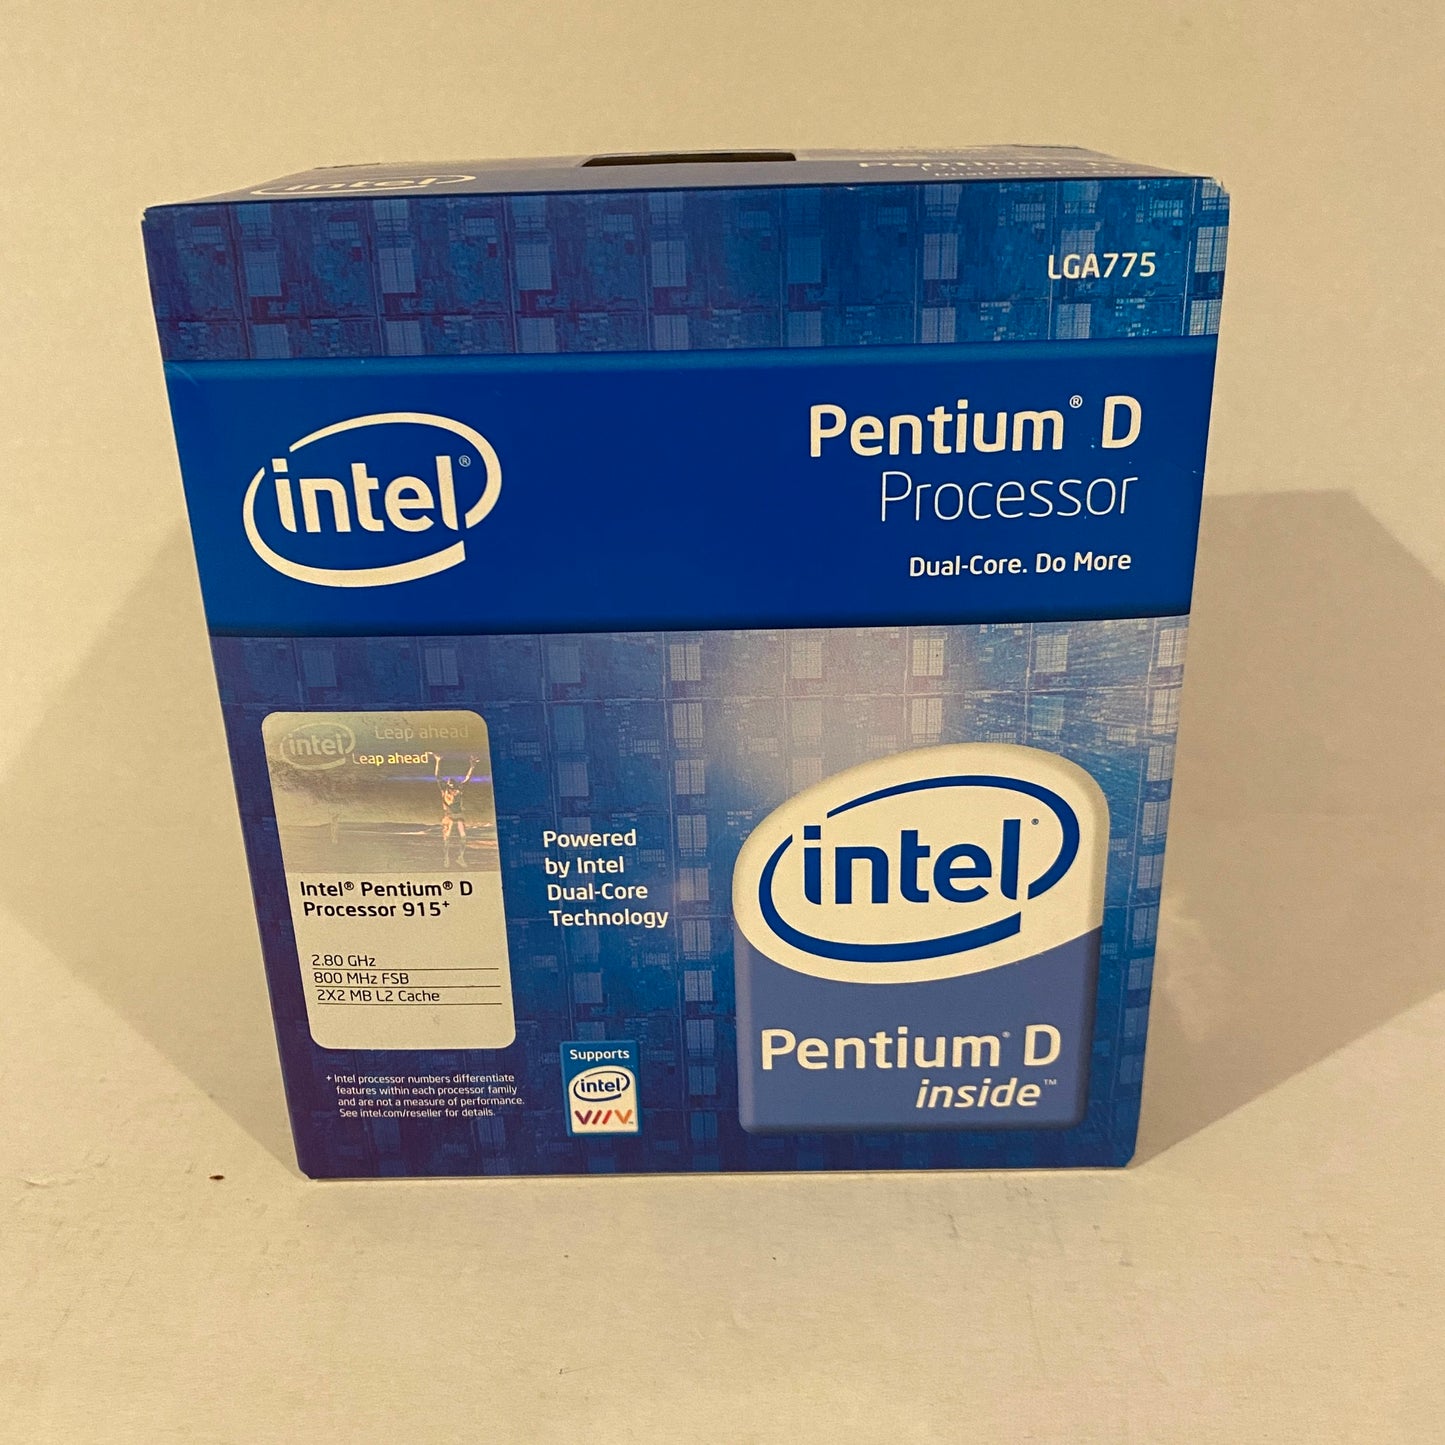 New Intel Pentium D Processor 915 2.80 Ghz with Heatsink and Fan - LGA775